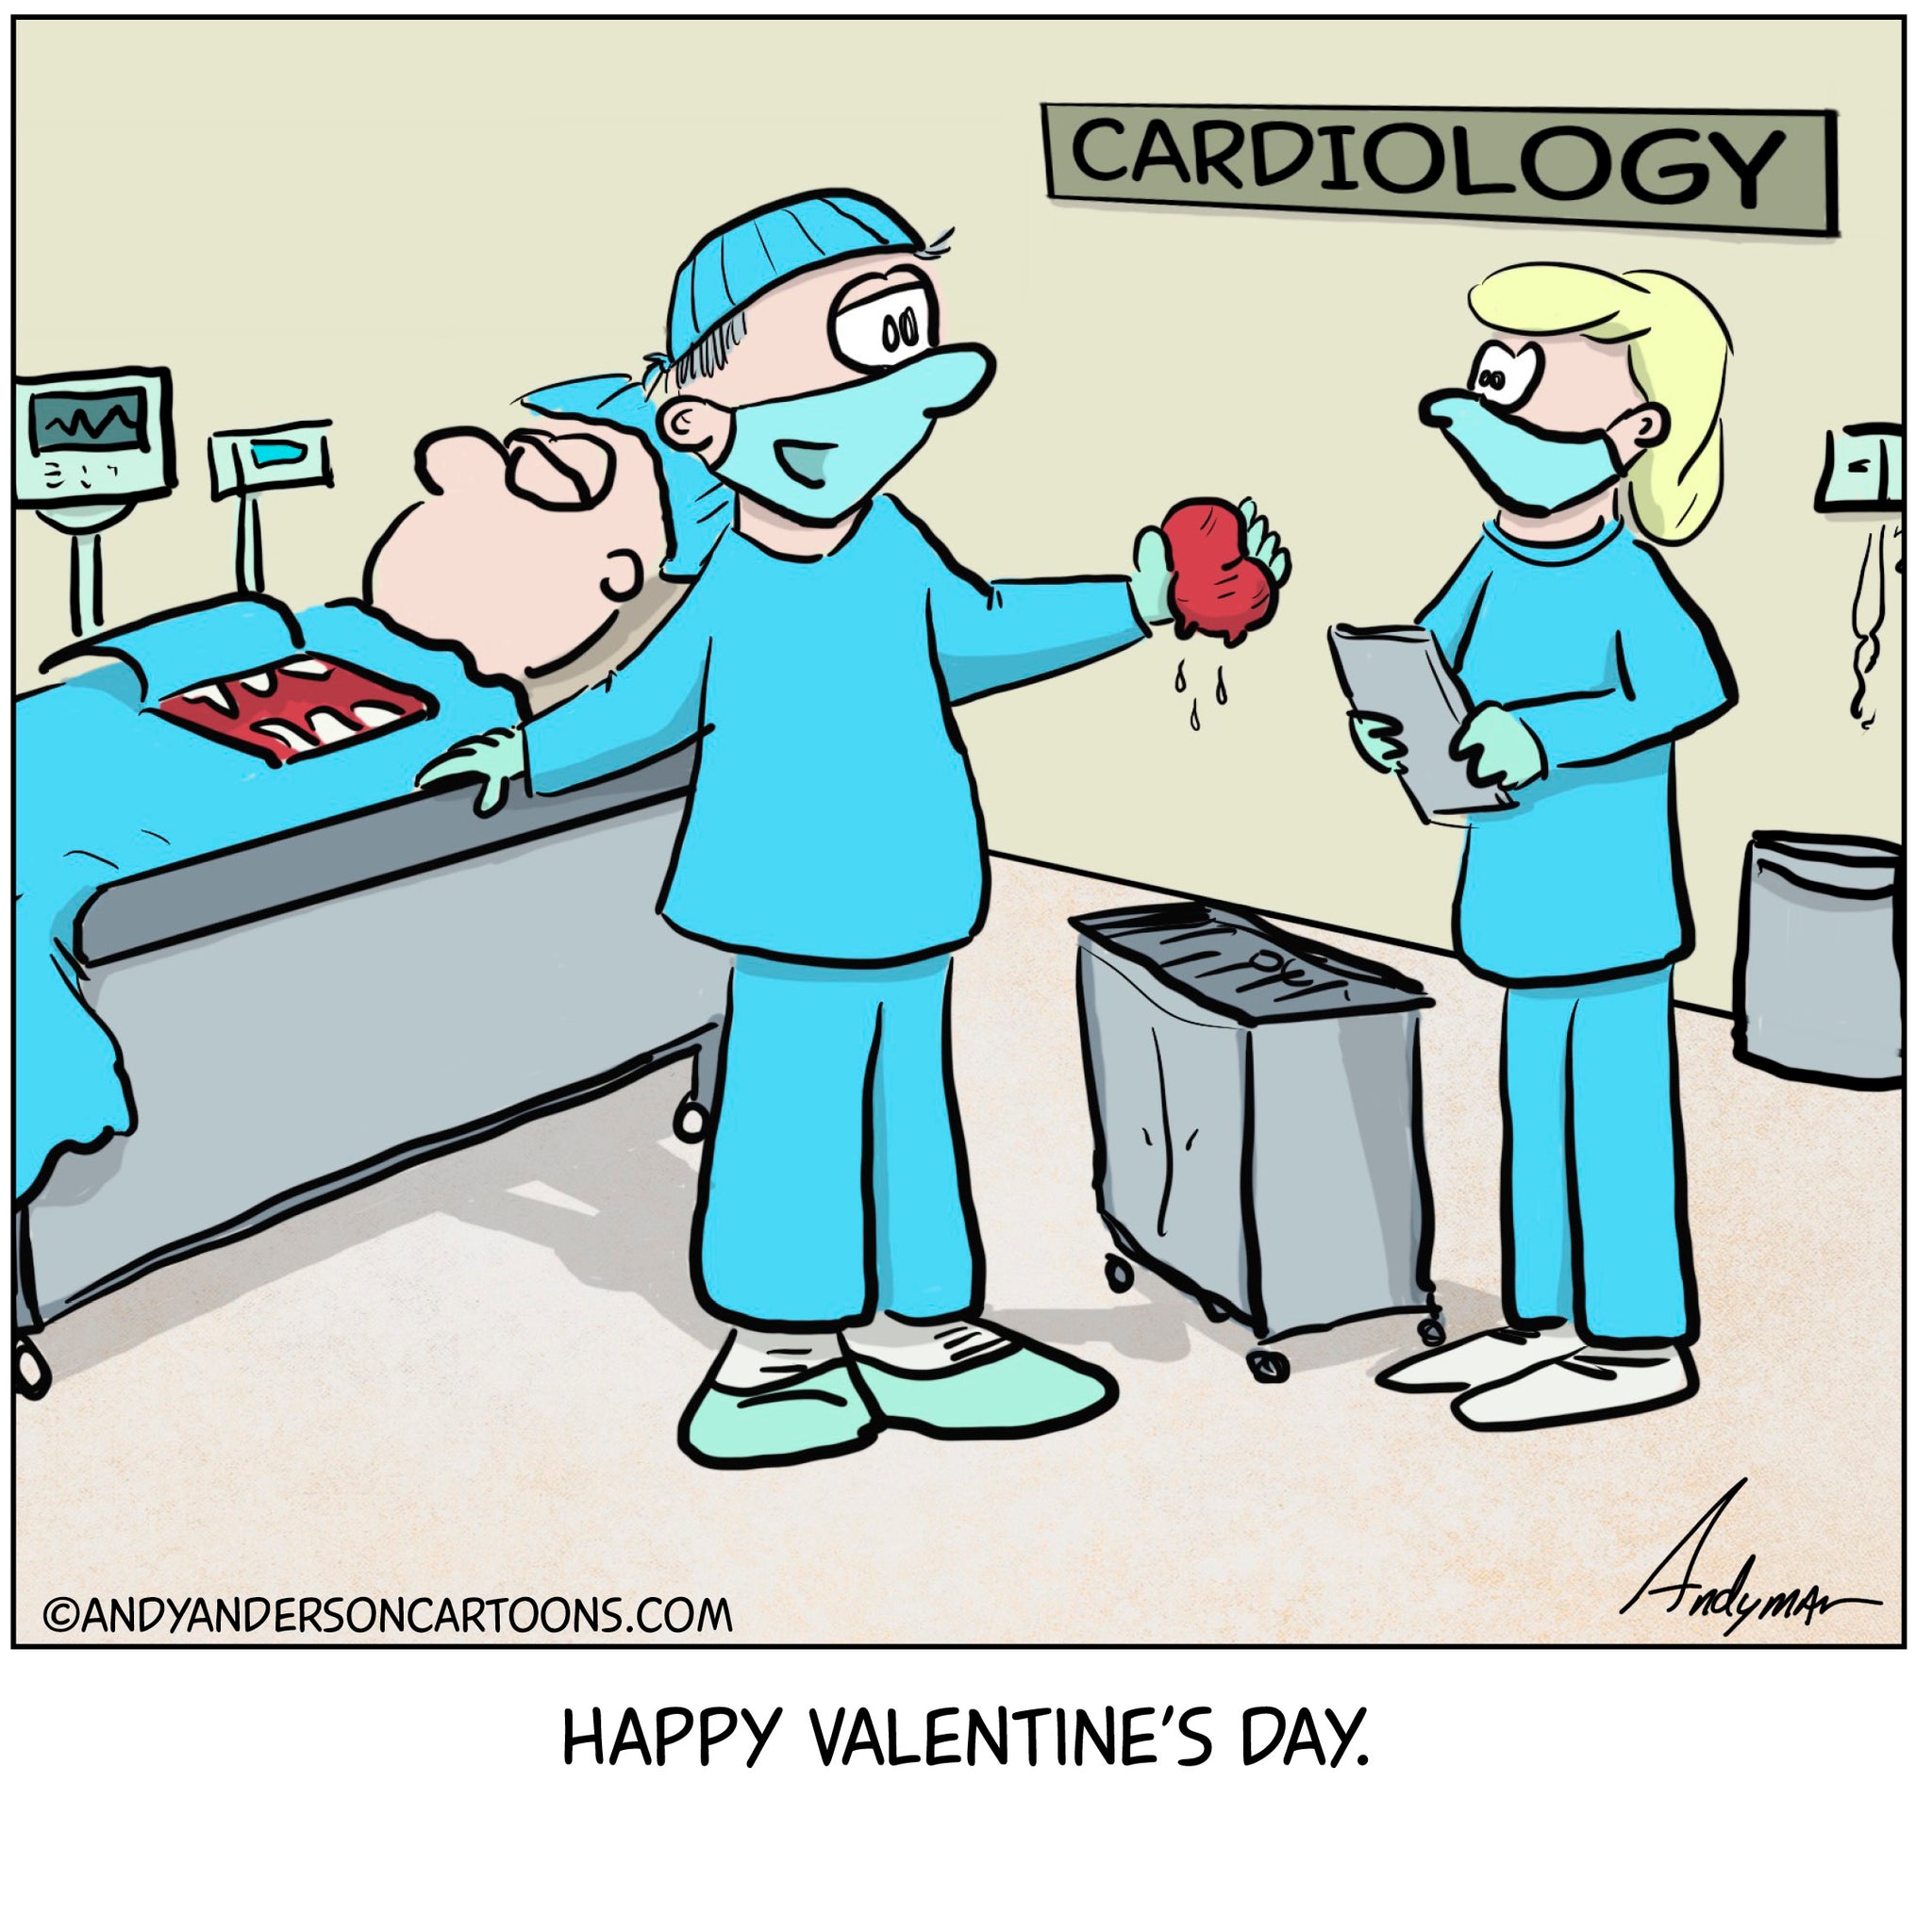 Cardiology Valentines Day cartoon